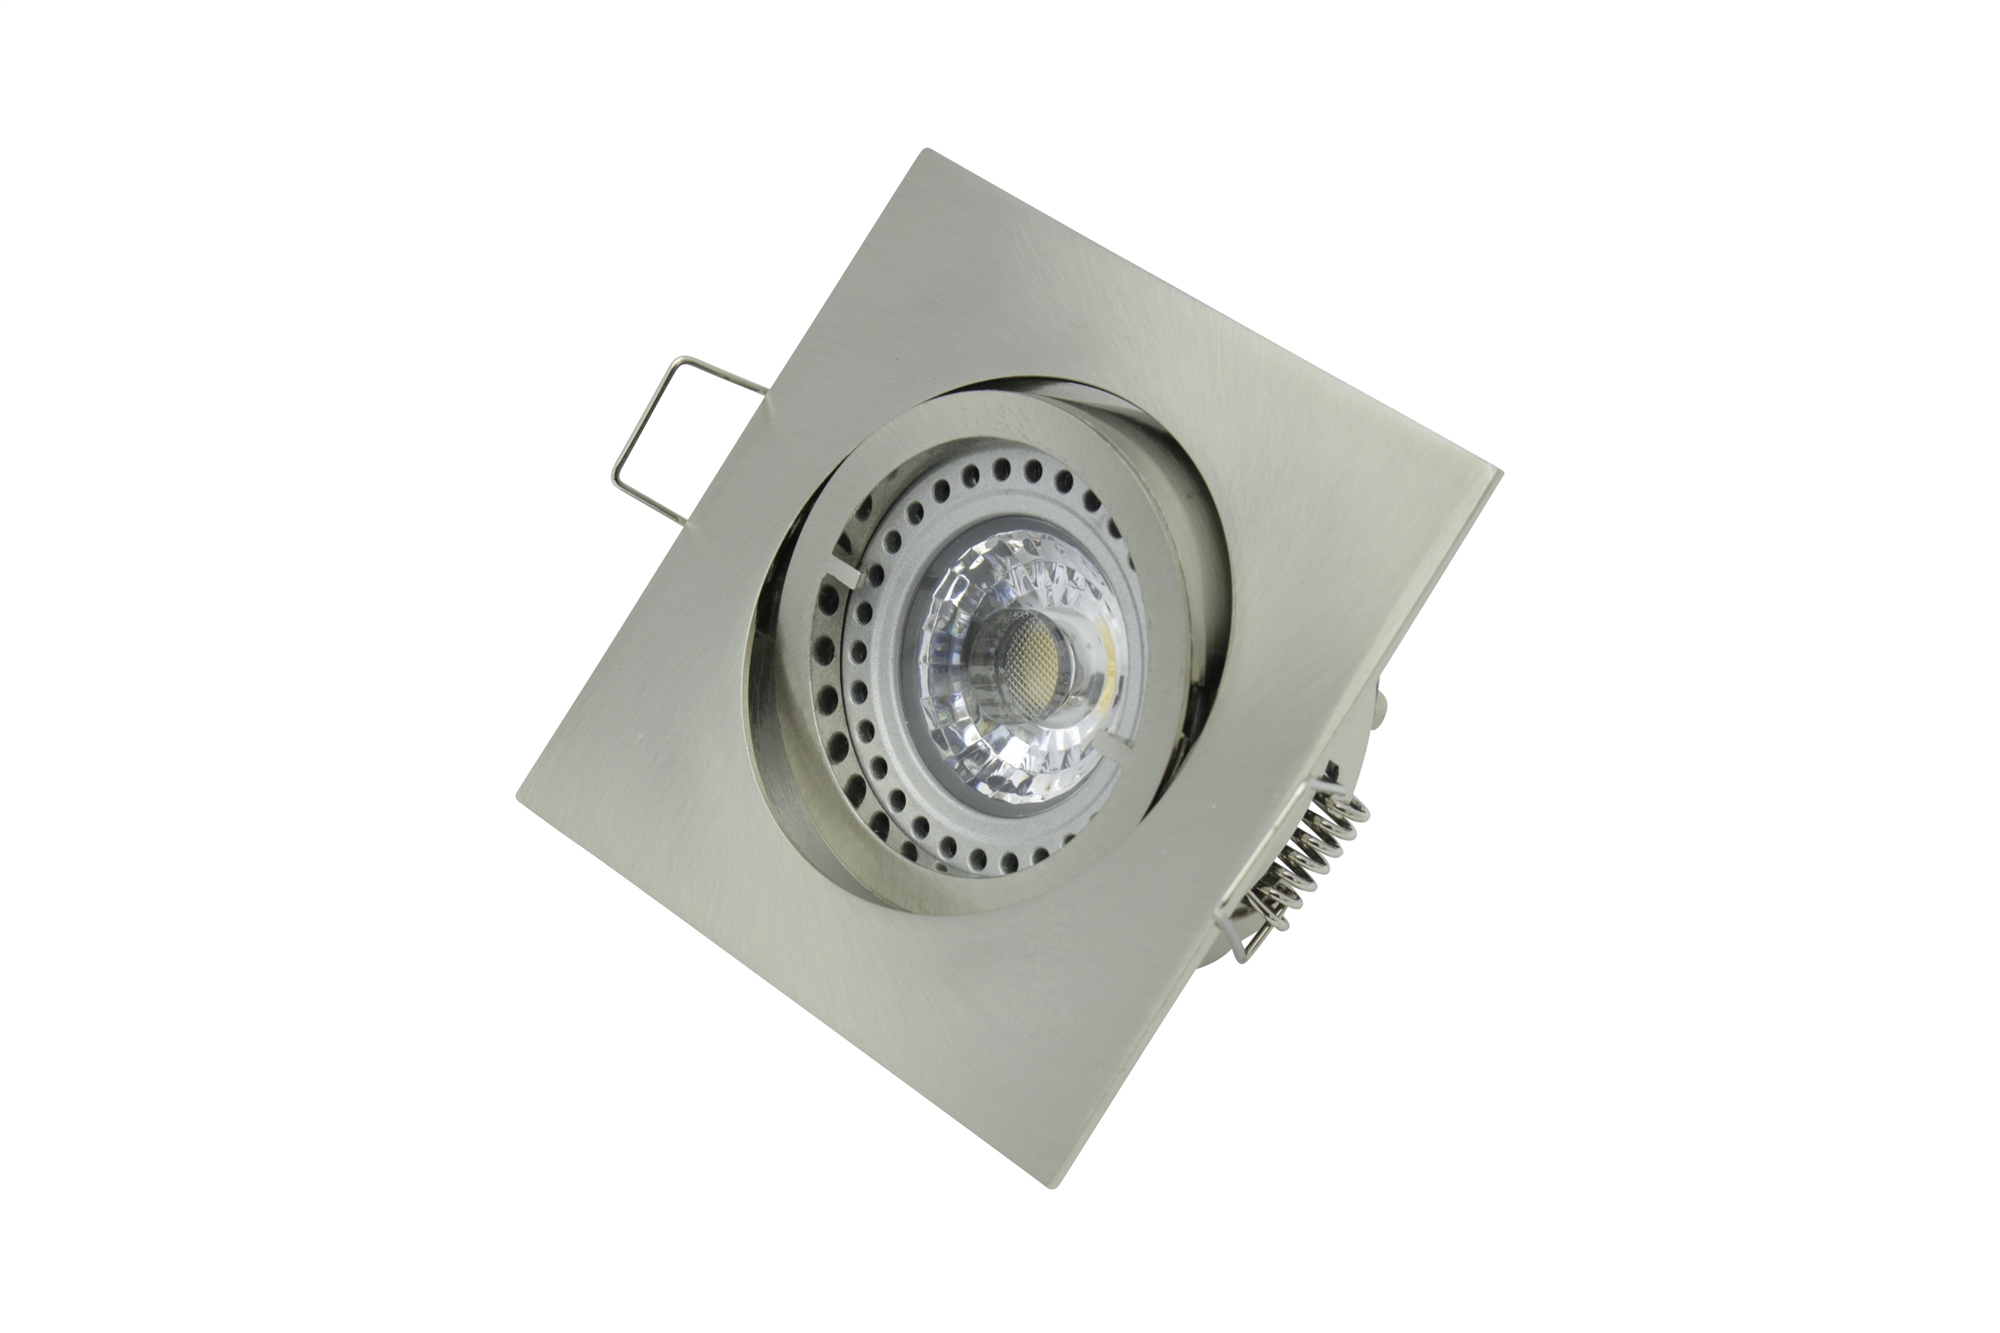 Lampenlux LED-Einbaustrahler Spot Snap eckig nickel gebürstet schwenkbar 8.2x8.2cm 230V GU10 rostfrei Aluminium